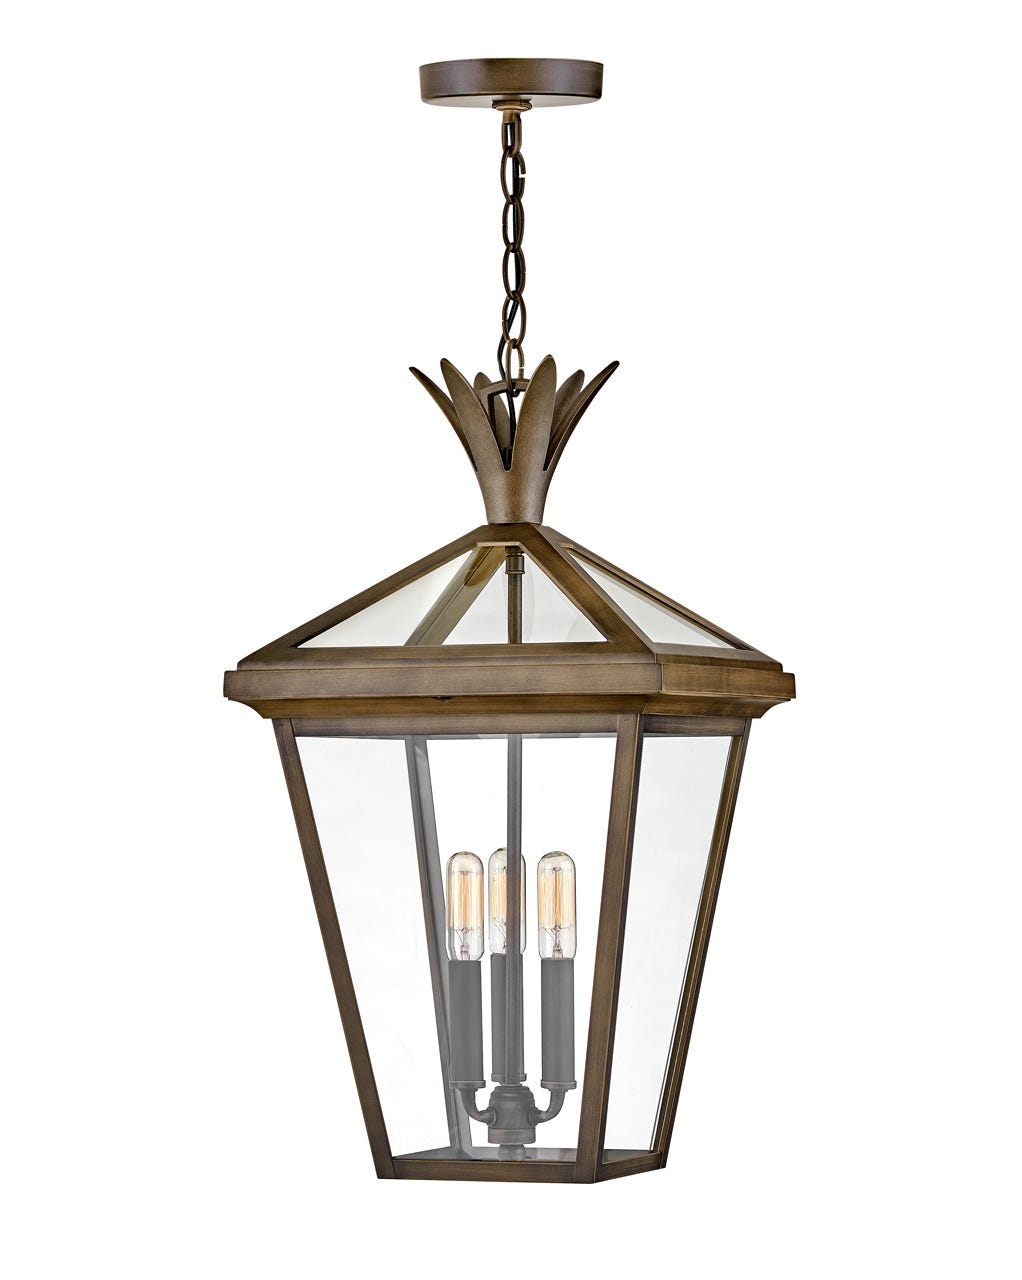 OUTDOOR PALMA Hanging Lantern Outdoor Light Fixture l Hanging Hinkley Burnished Bronze 12.0x12.0x21.5 